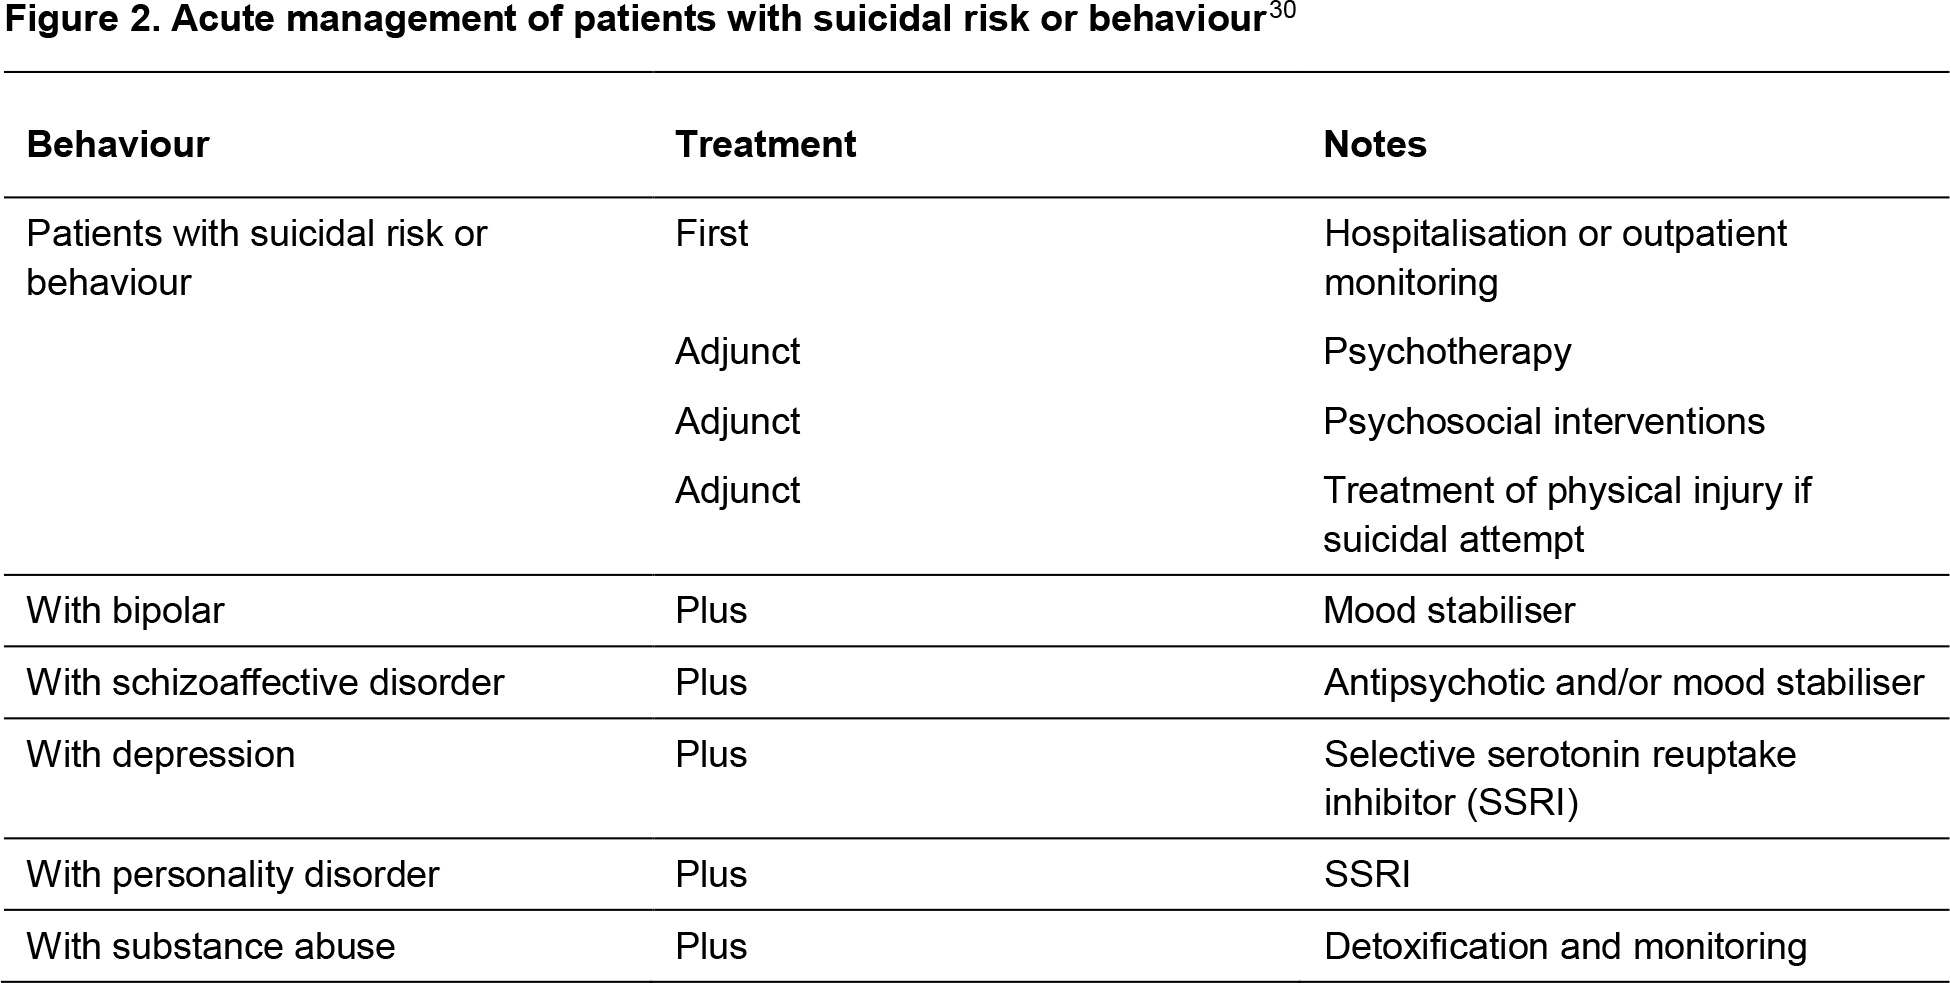 Figure 2. Management of patients with suicidal risk or behaviour